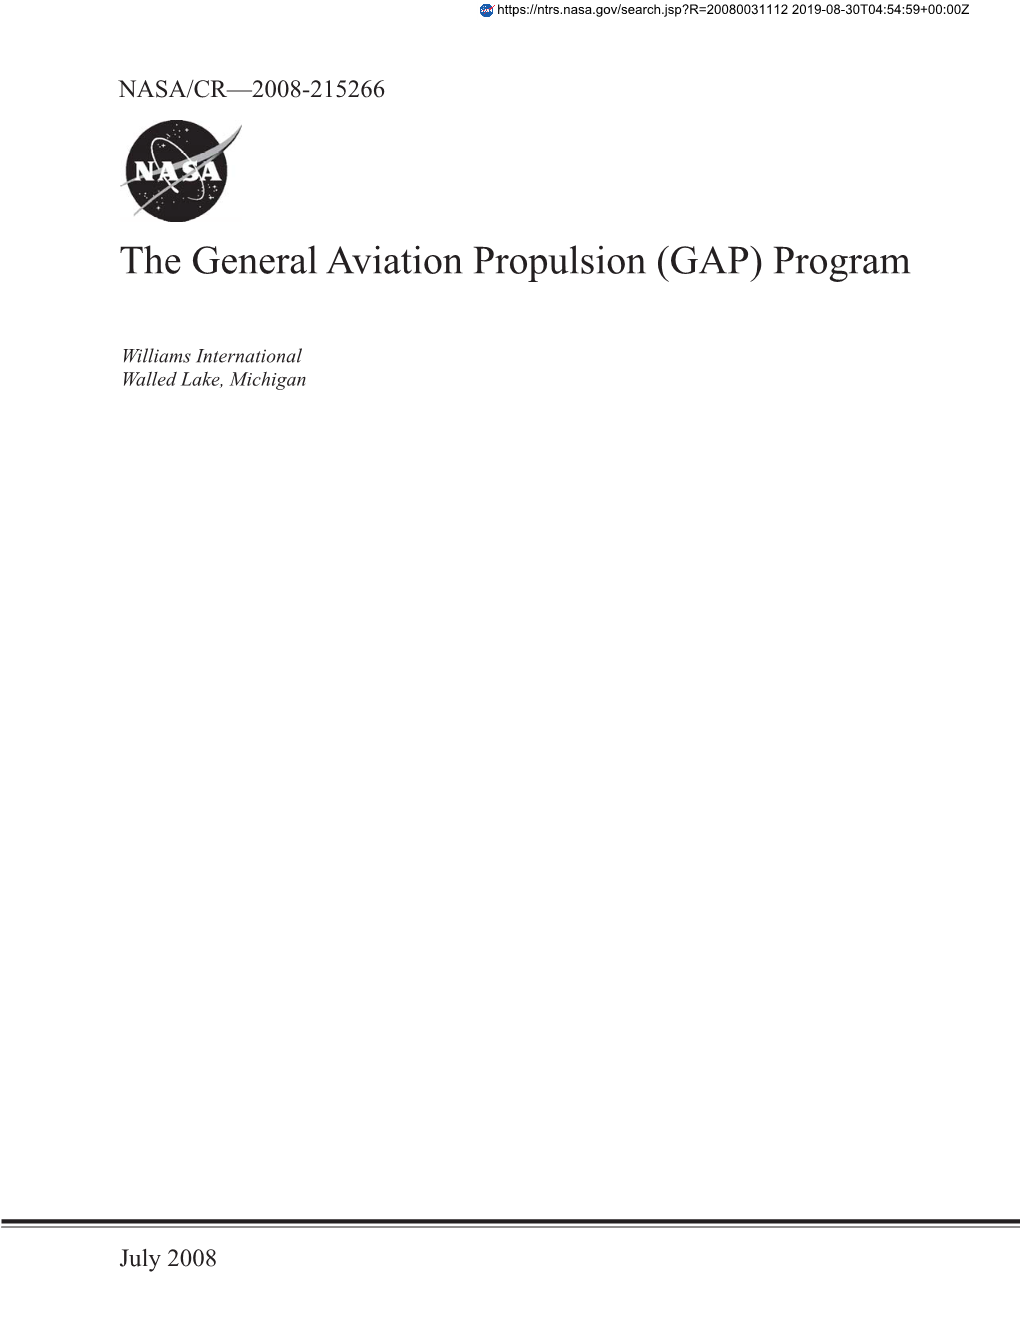 The General Aviation Propulsion (GAP) Program